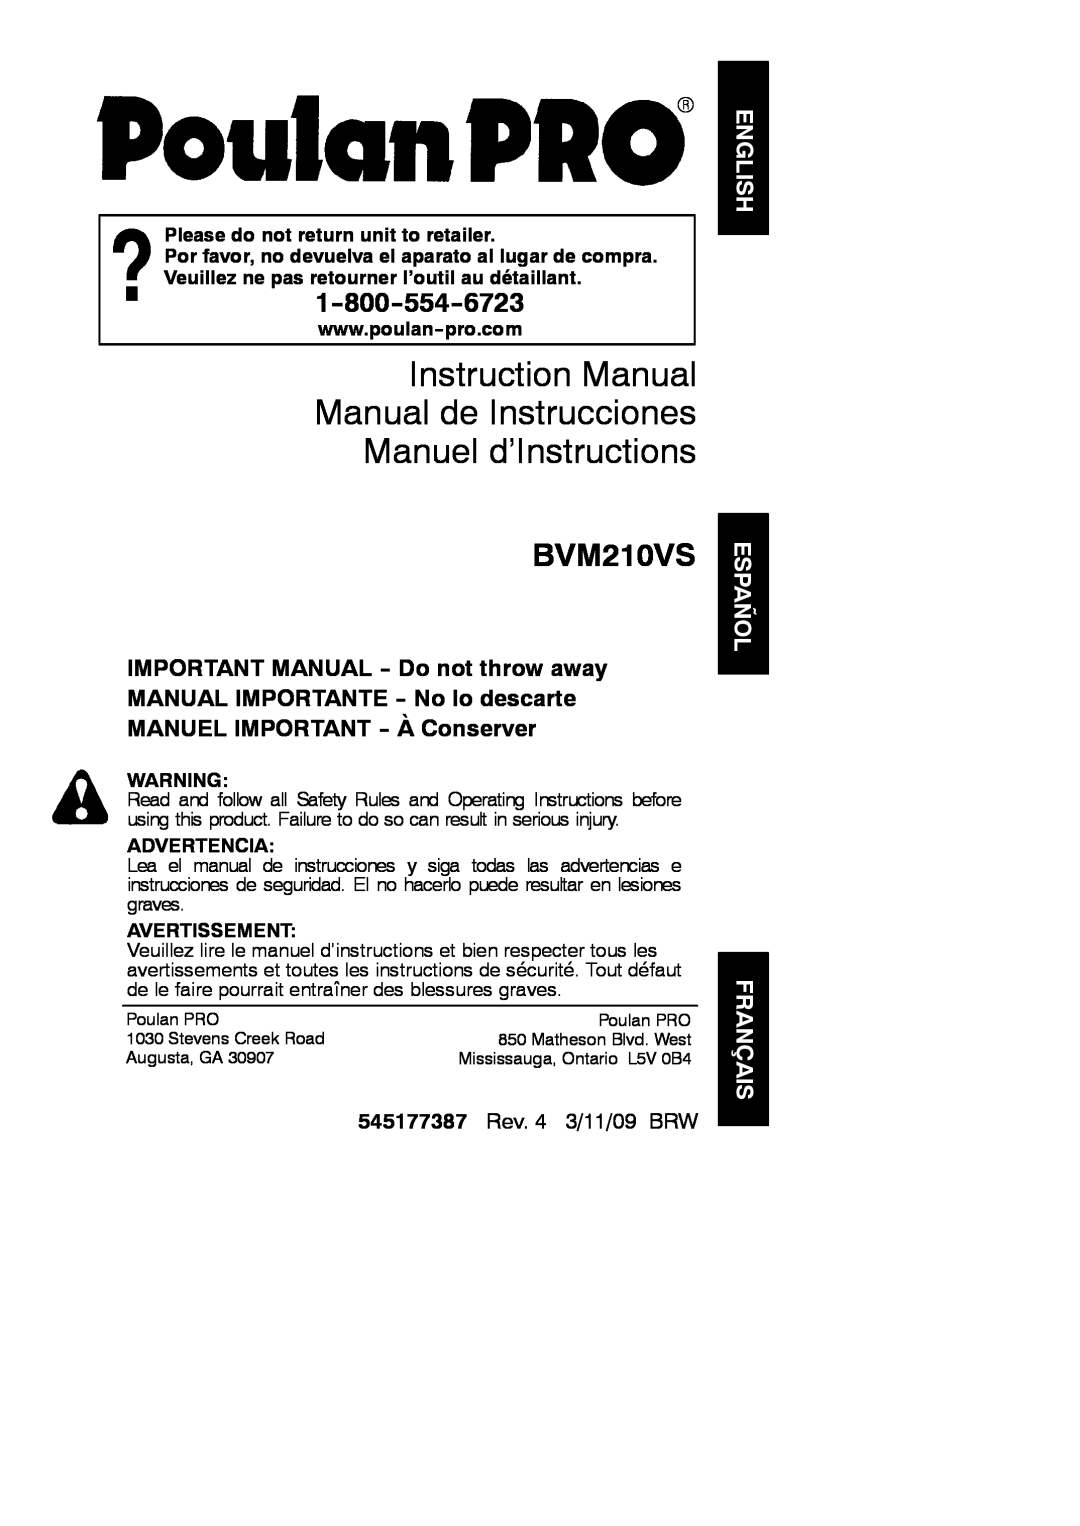 Poulan instruction manual BVM210VS, English Español Français, 545177387 Rev. 4 3/11/09 BRW, Advertencia, Avertissement 